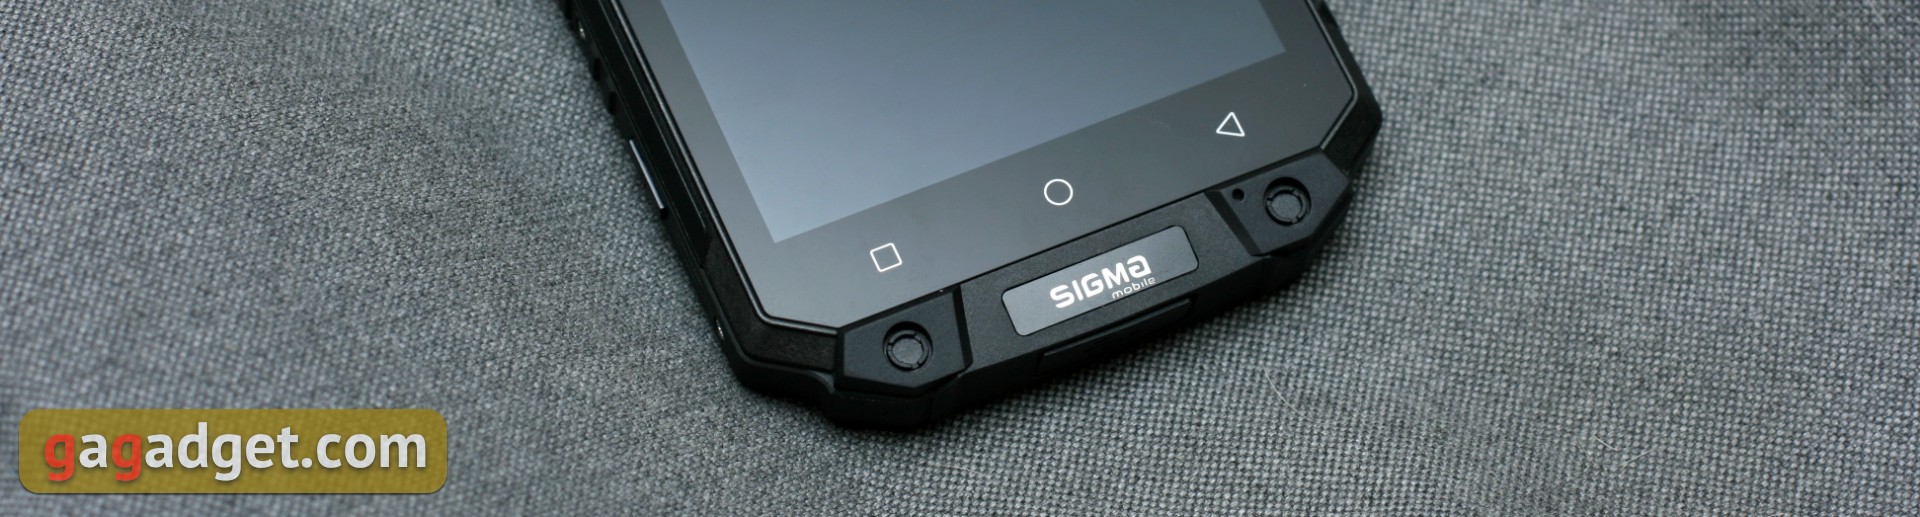 Обзор Sigma Mobile X-treme PQ39 MAX: современный защищённый батарейкофон-12